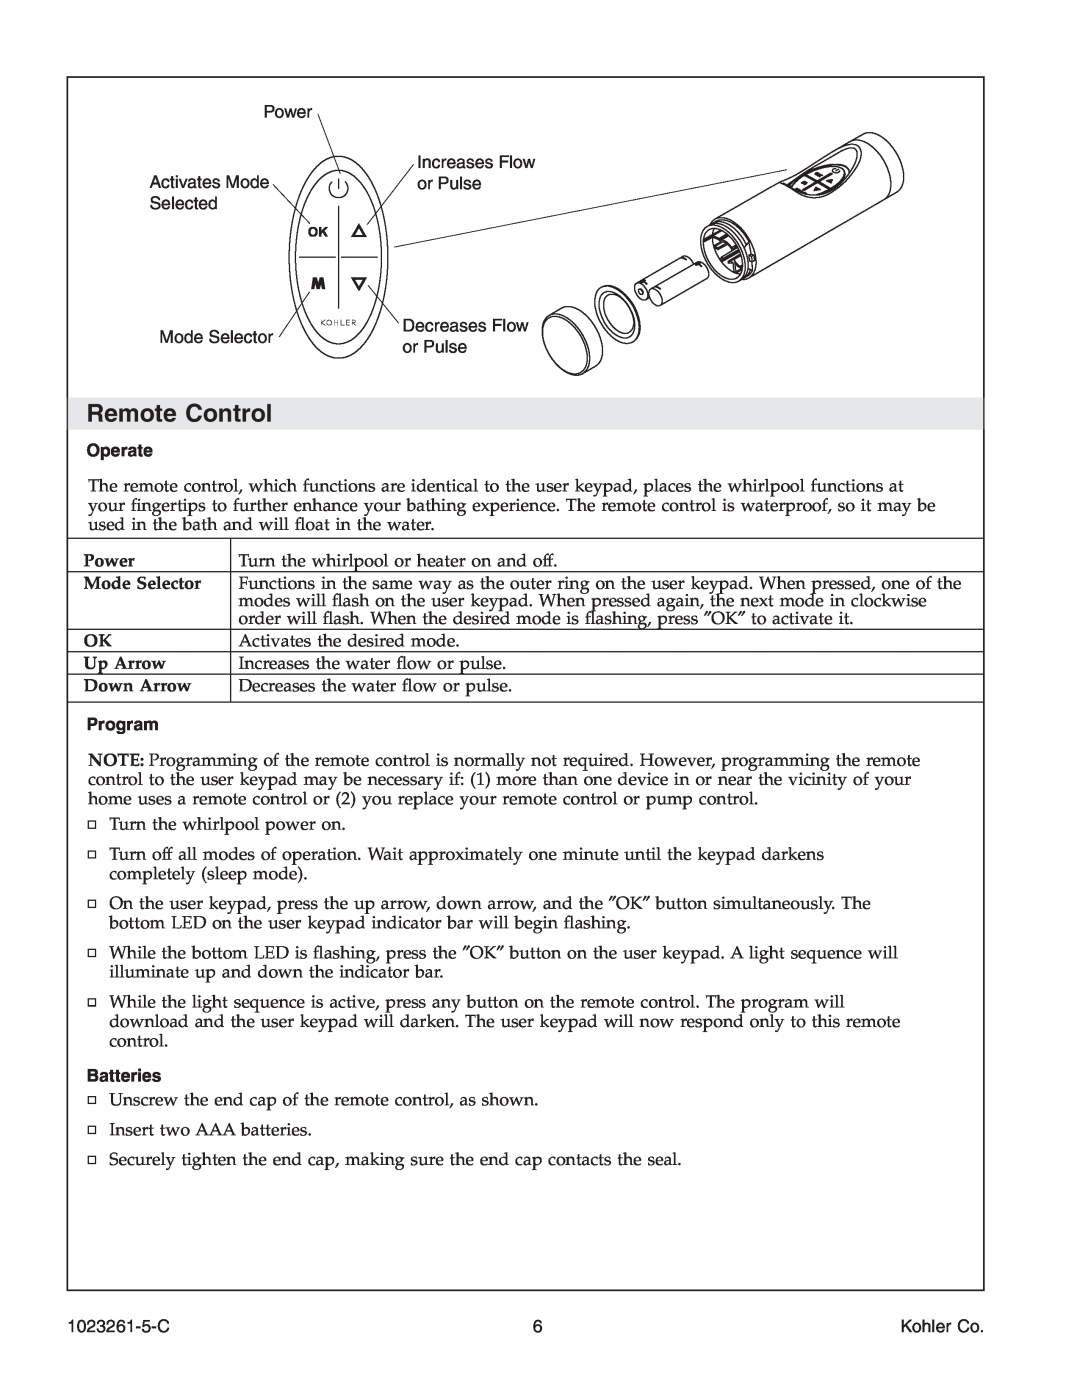 Kohler K-1110-CT manual Remote Control, Operate, Program, Batteries 